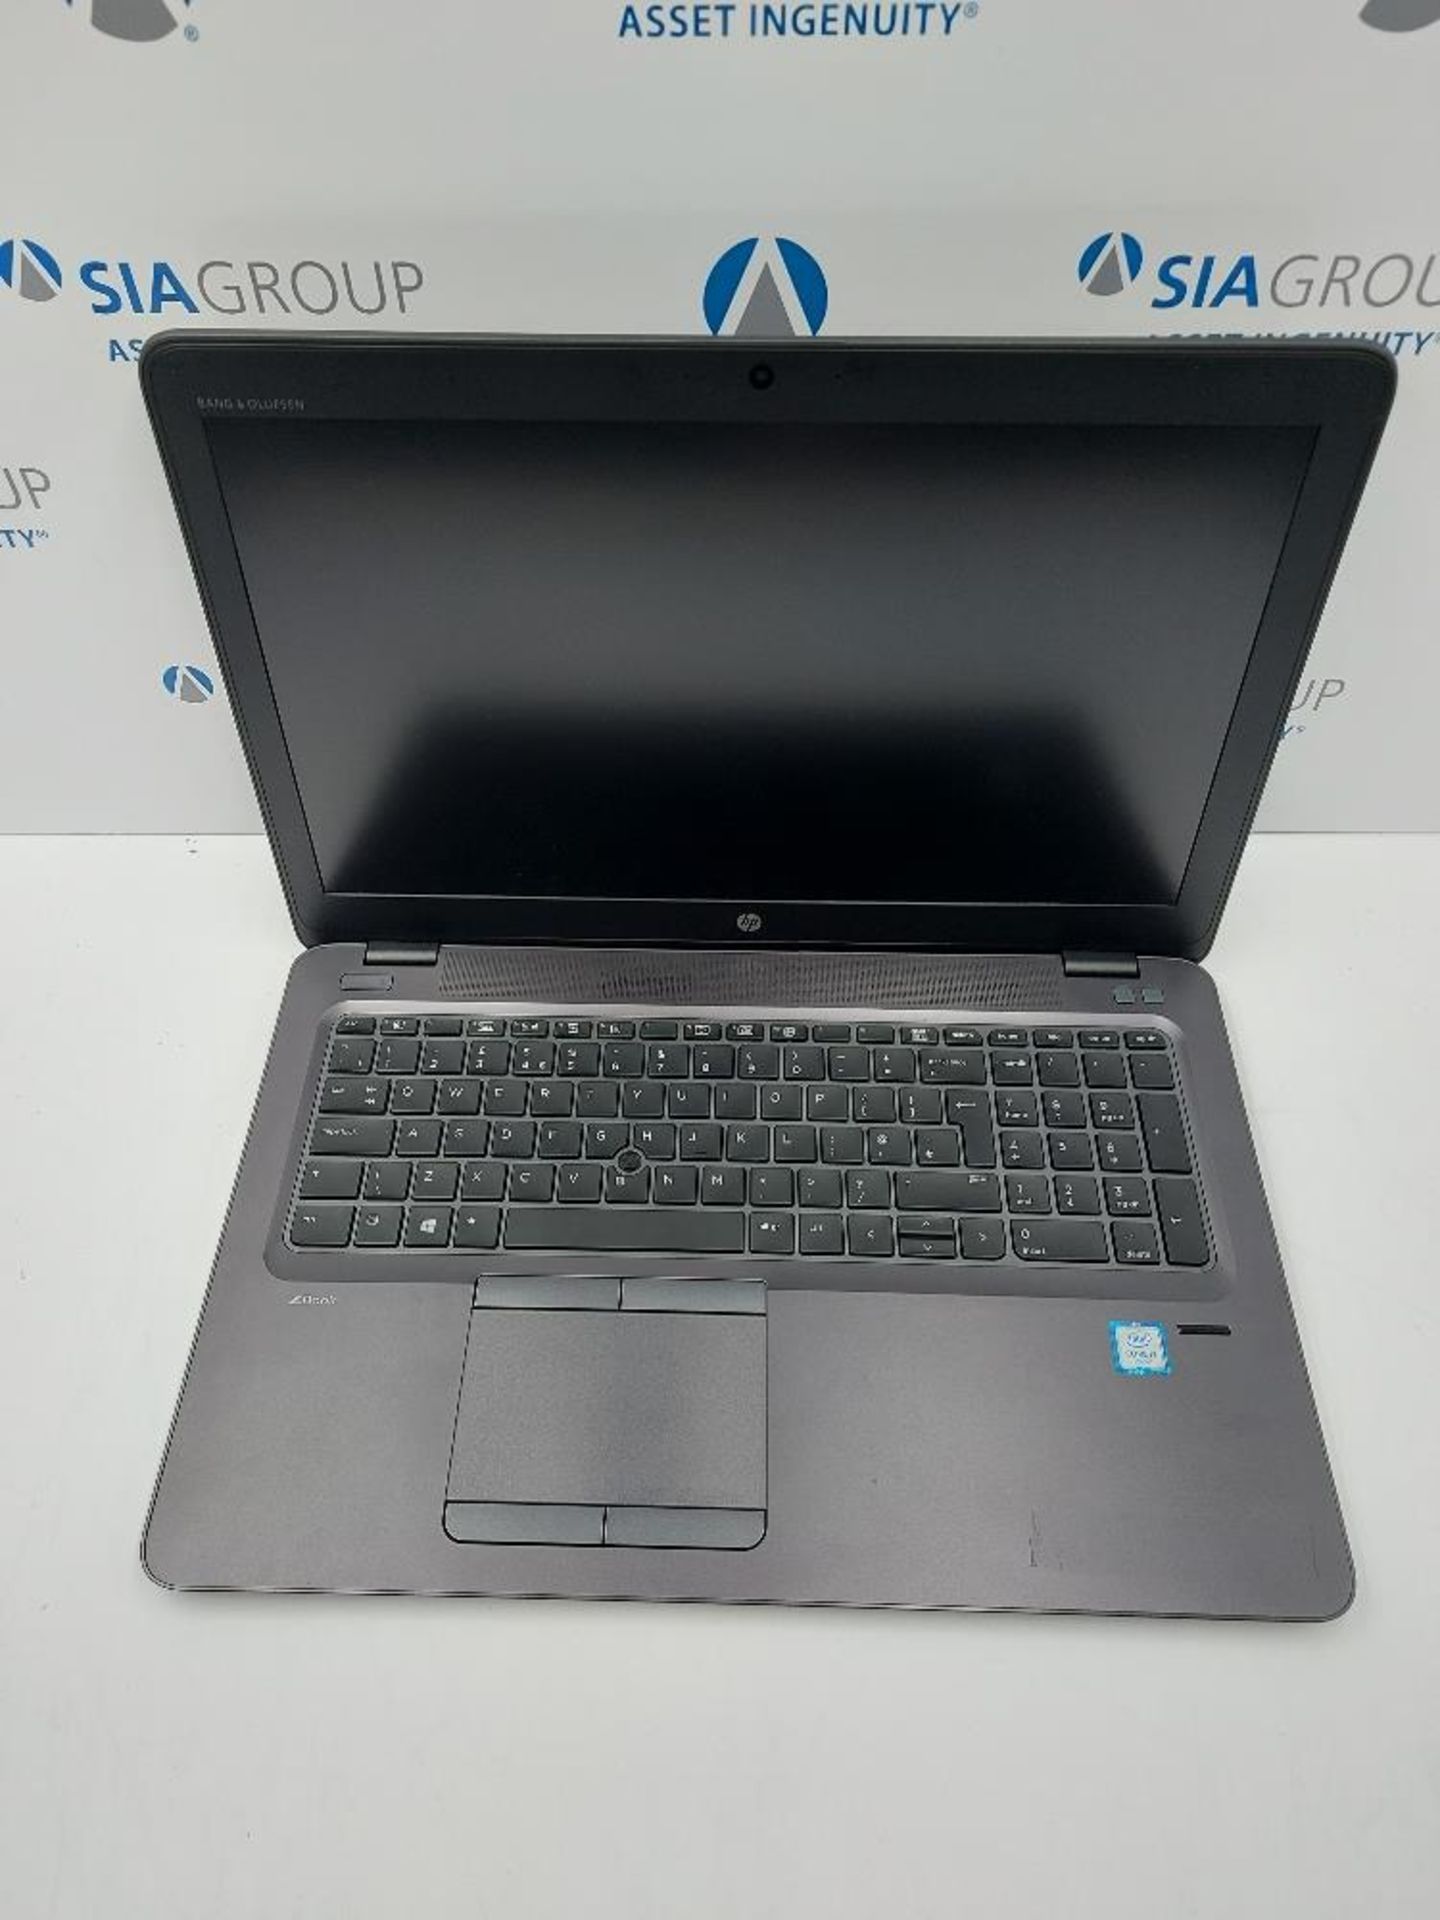 HP Zbook 15u G3 Laptop with Flight Case - Image 3 of 11